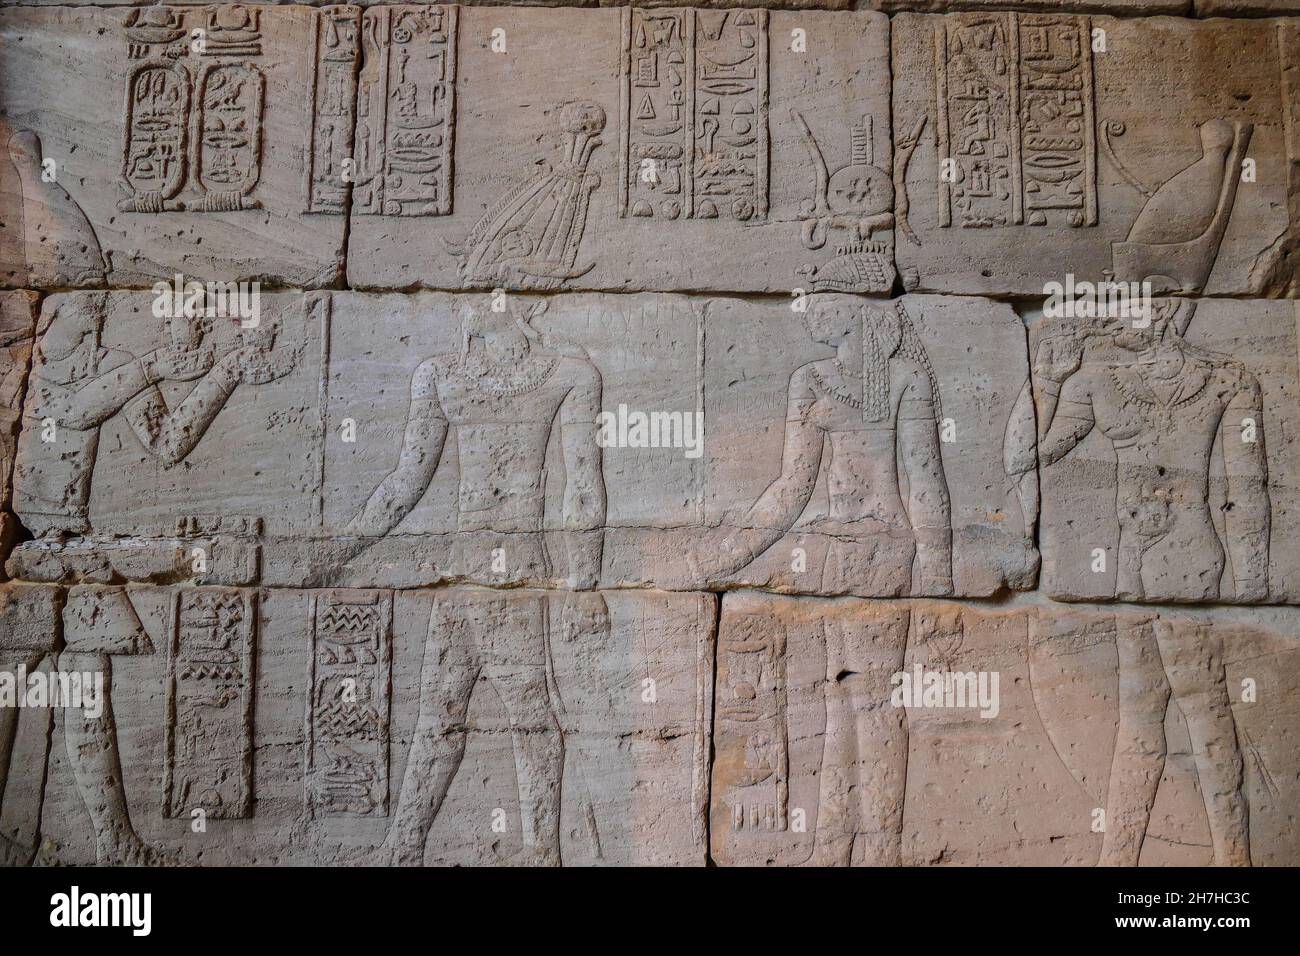 MUSEUM OF NATURAL HISTORY ANCIENT EGYPT FRESCO MANHATTAN NEW-YORK USA Stock Photo